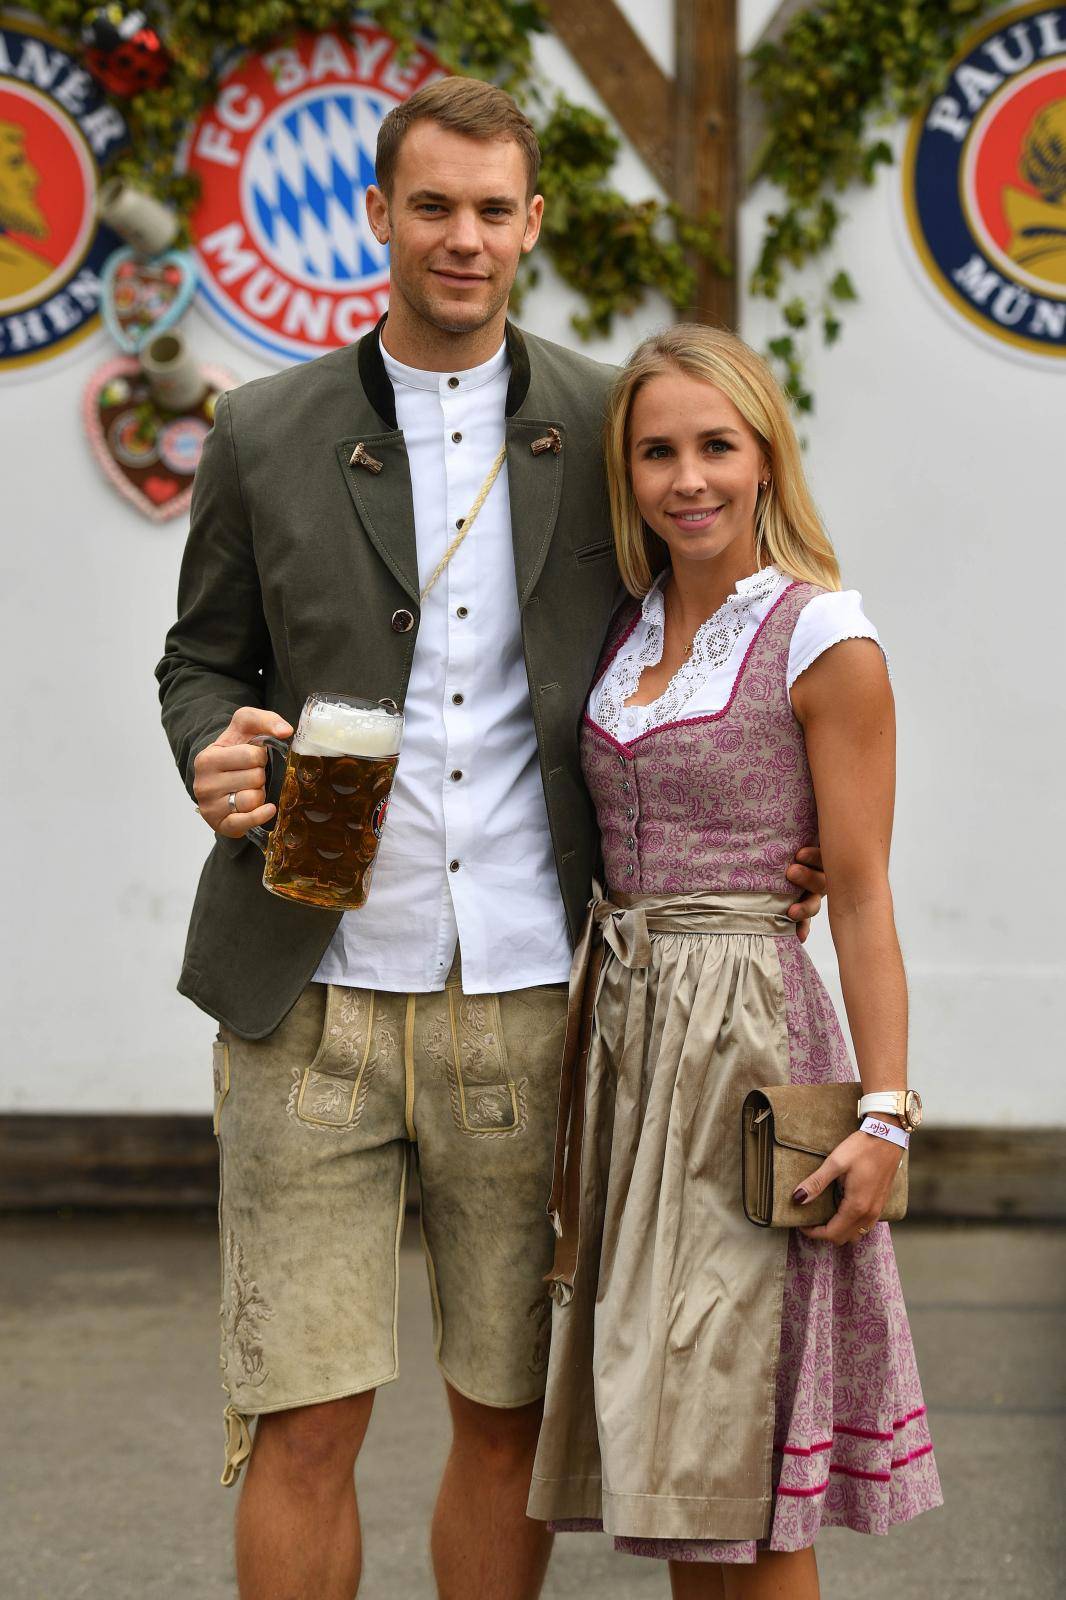 Bayern at the Oktoberfest 2019.